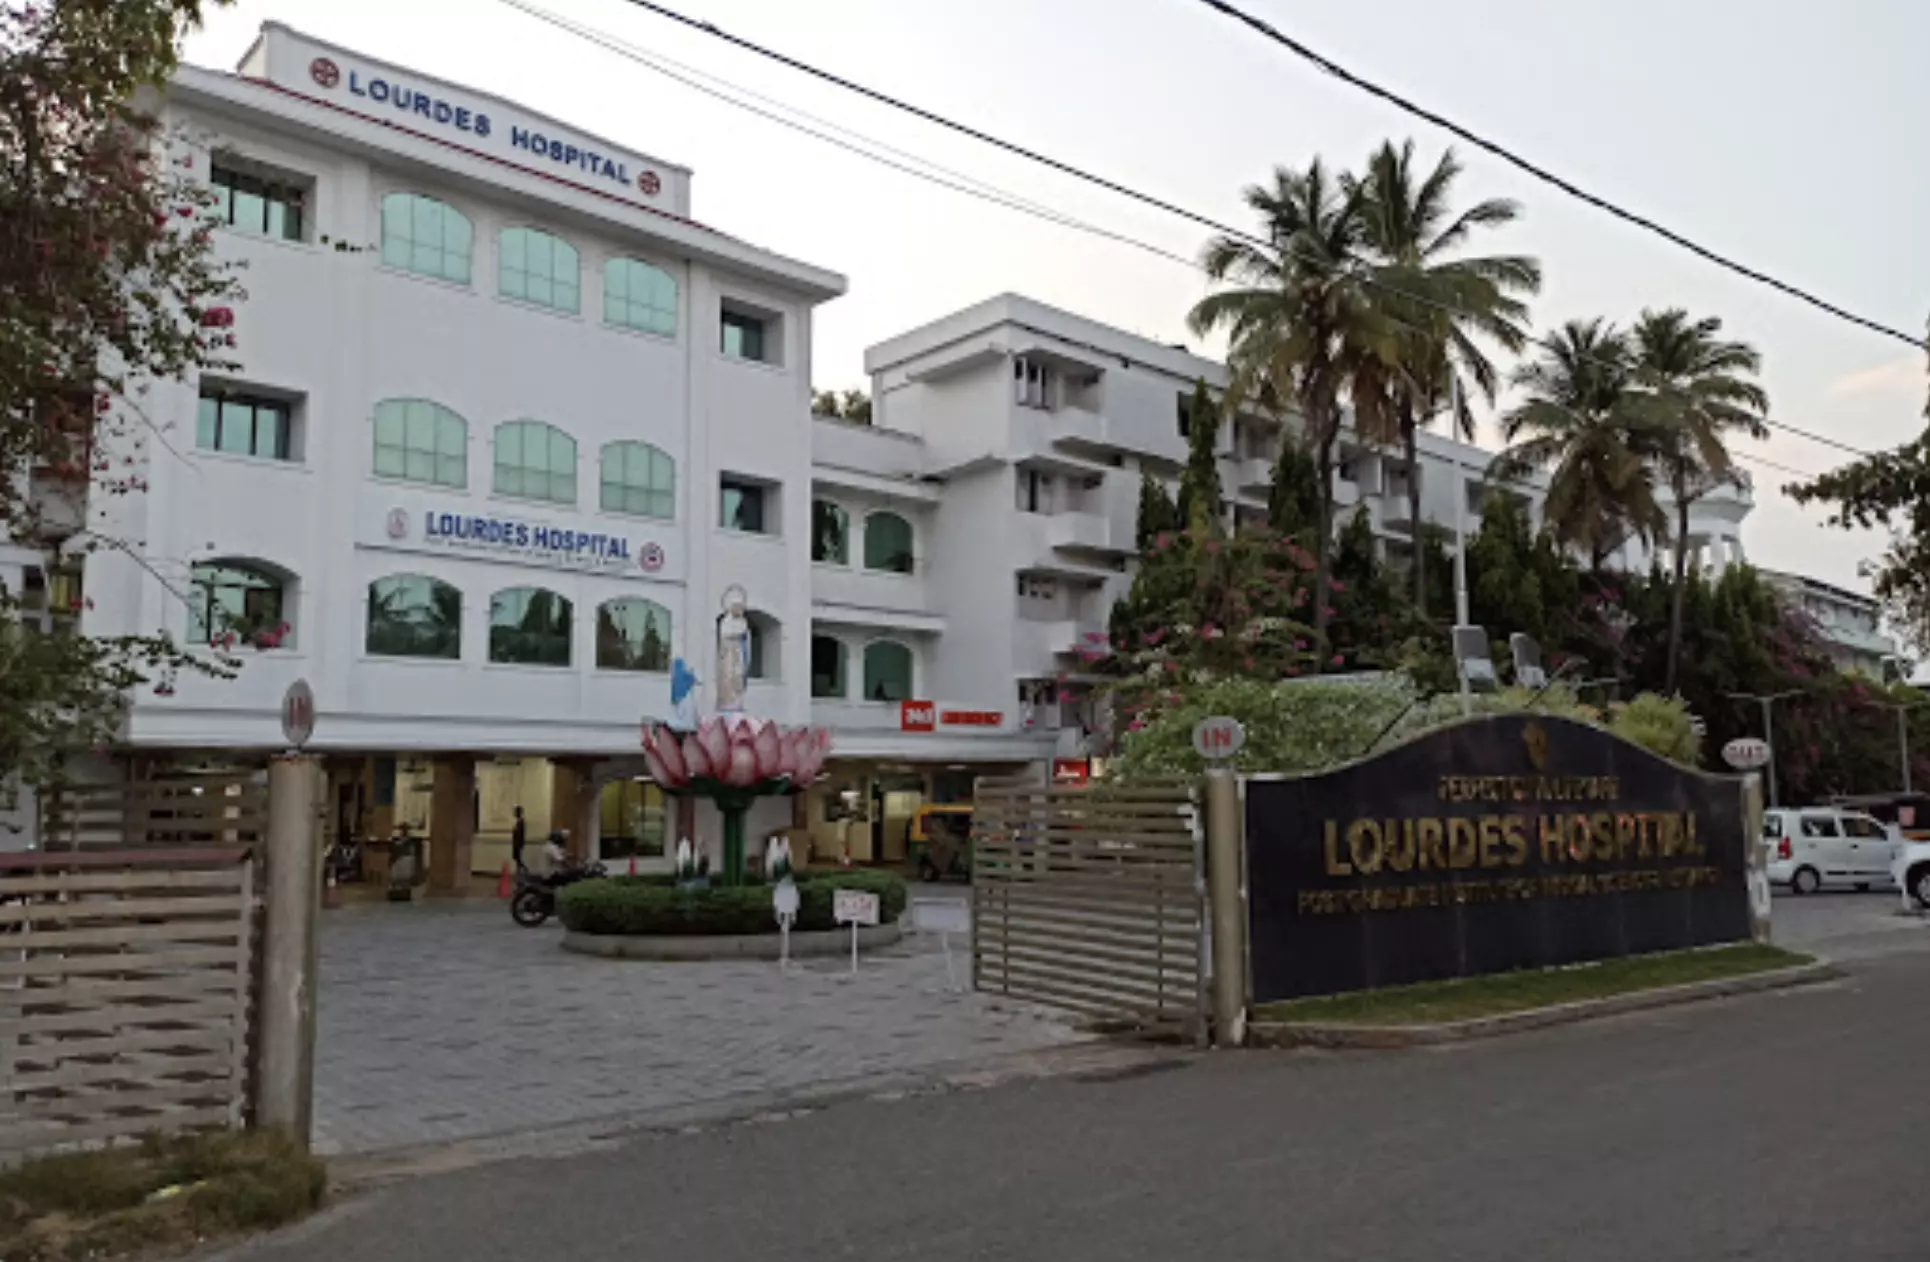 Lourdies Hospital